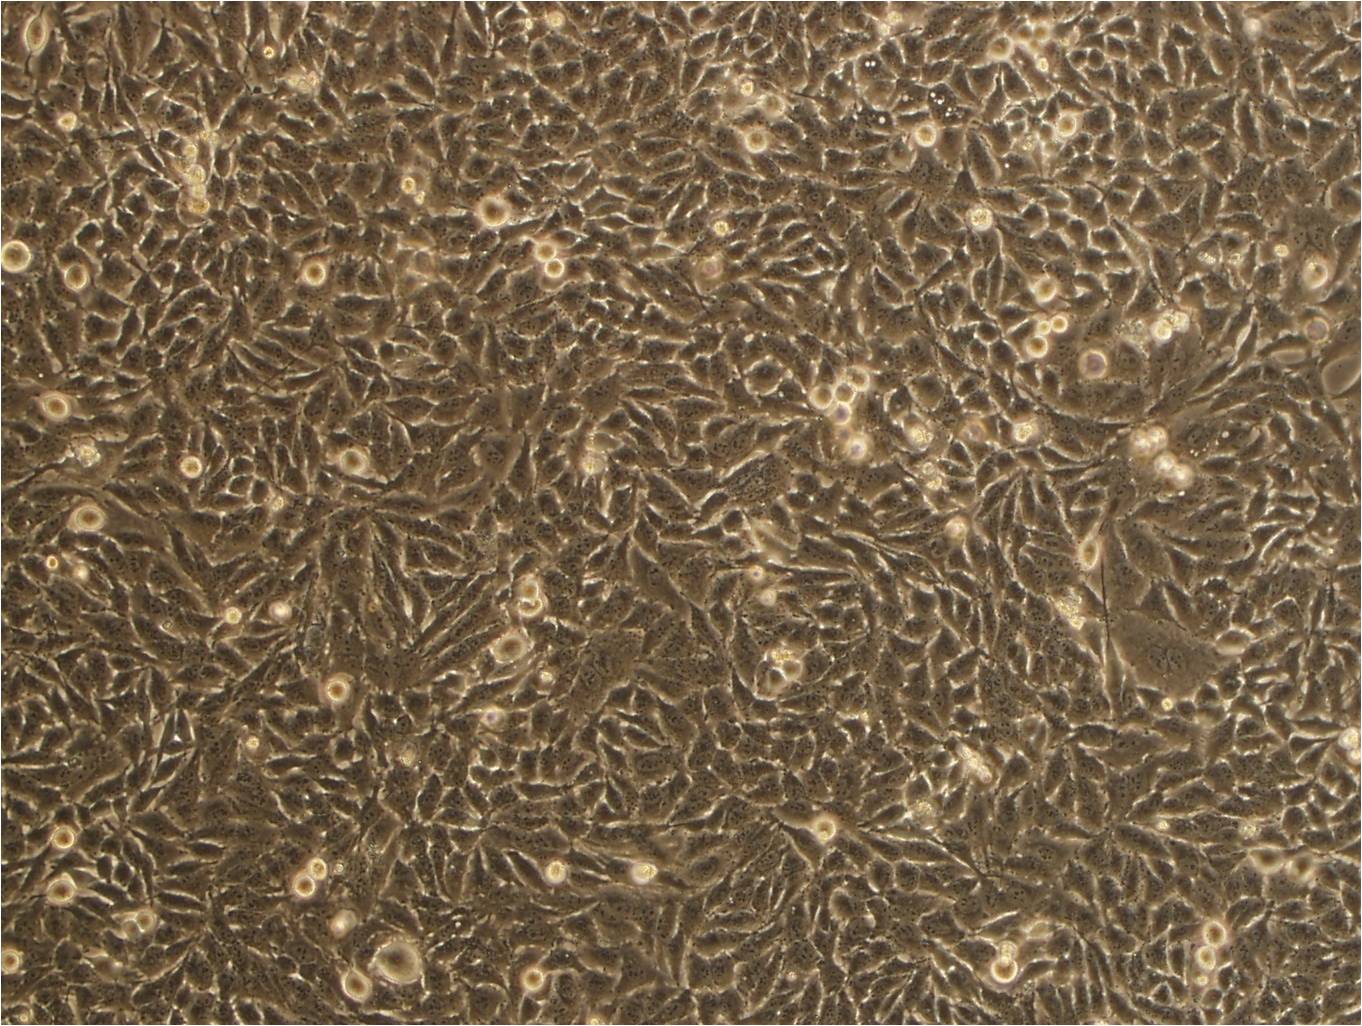 HT22小鼠海马神经元复苏细胞(附STR鉴定报告)